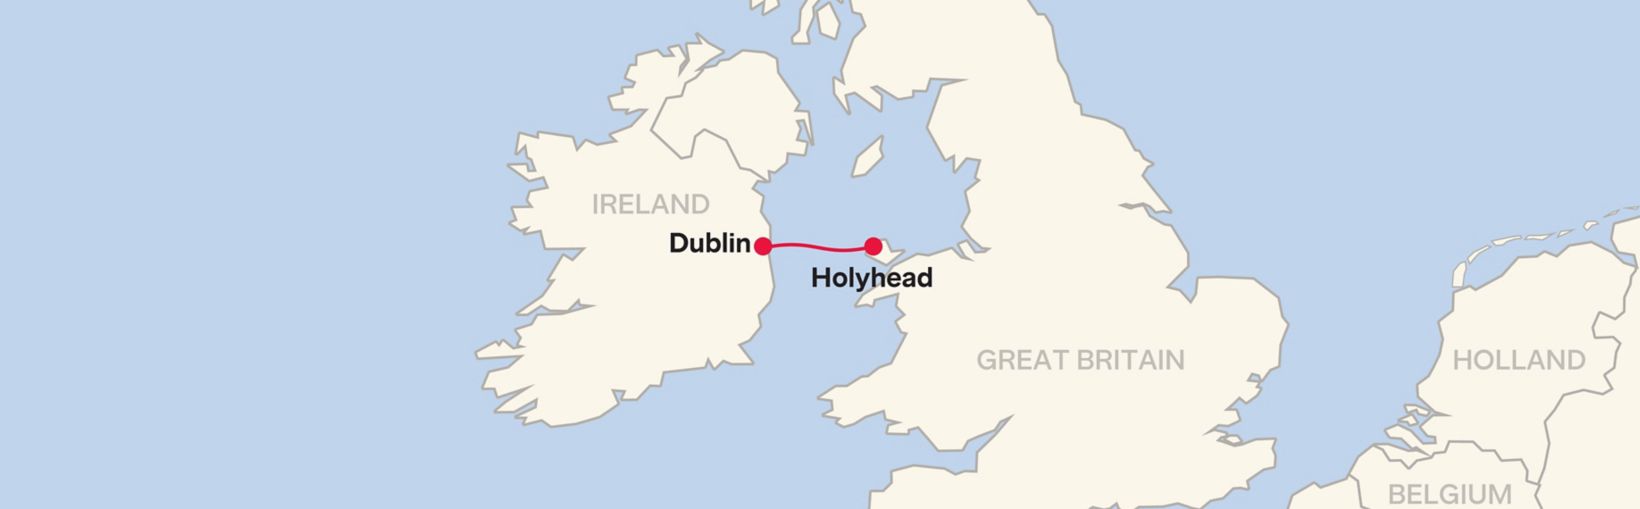 Recorrido de la línea Stena Dublin - Holyhead